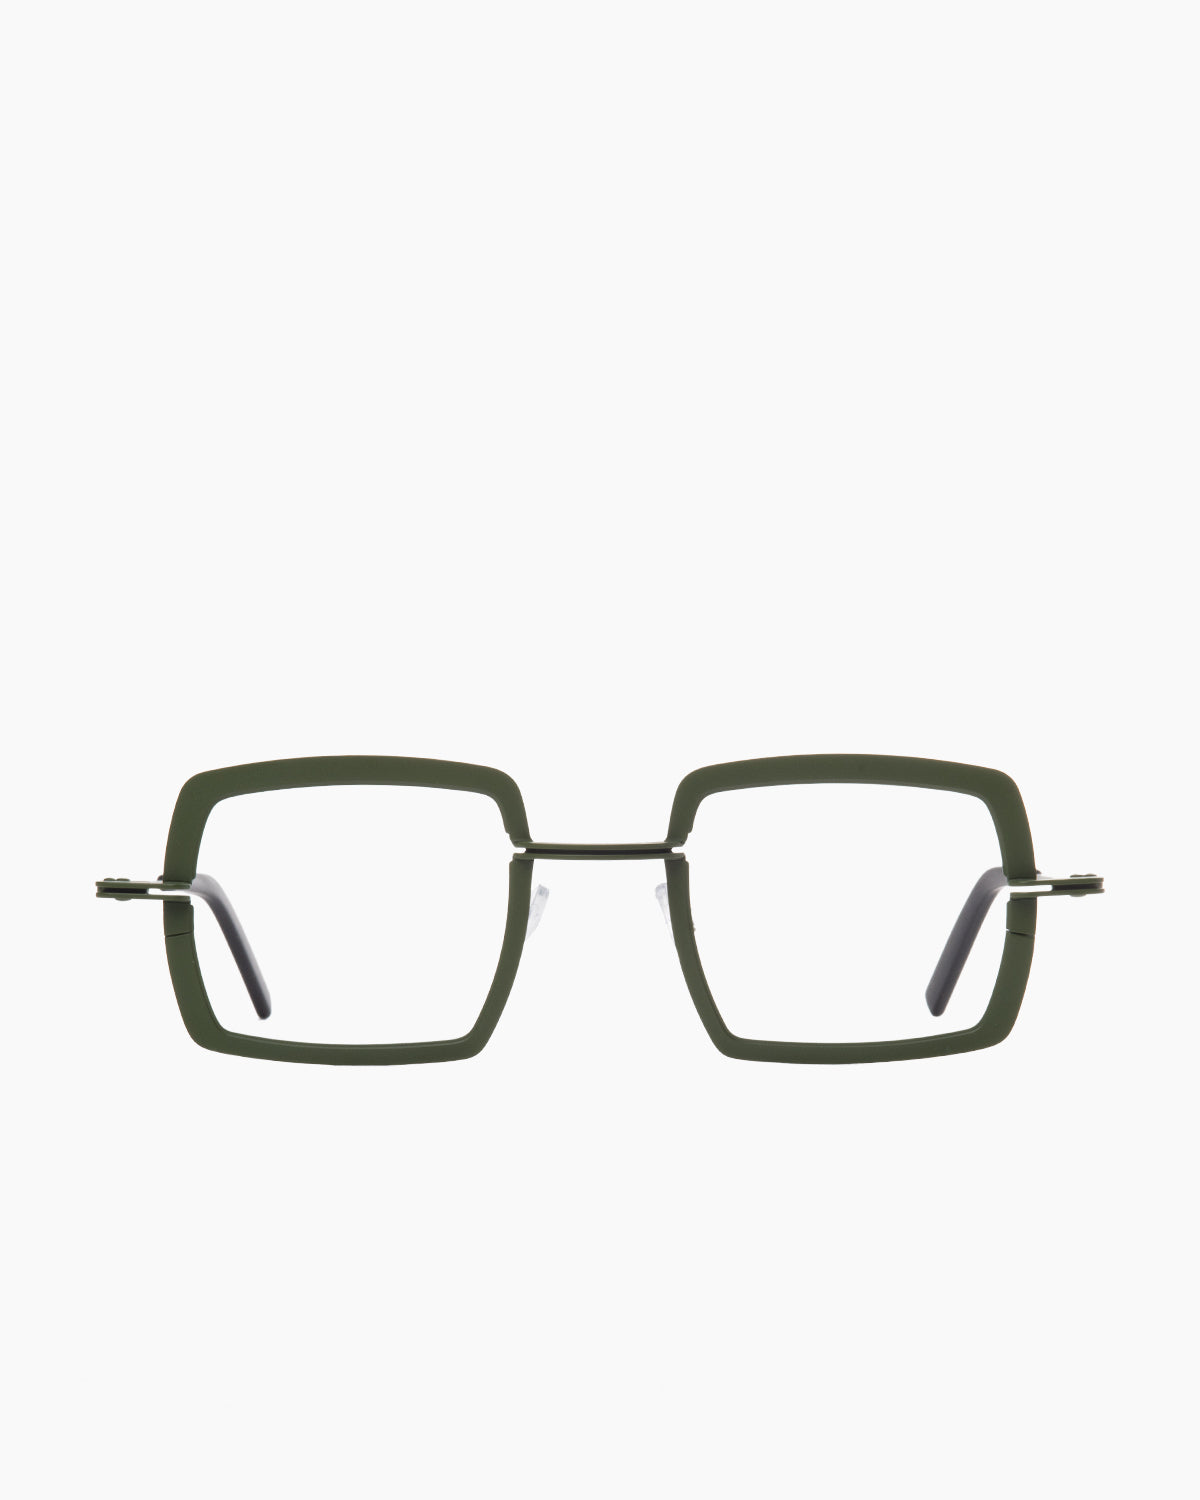 Theo - super - 184 | Bar à lunettes:  Marie-Sophie Dion